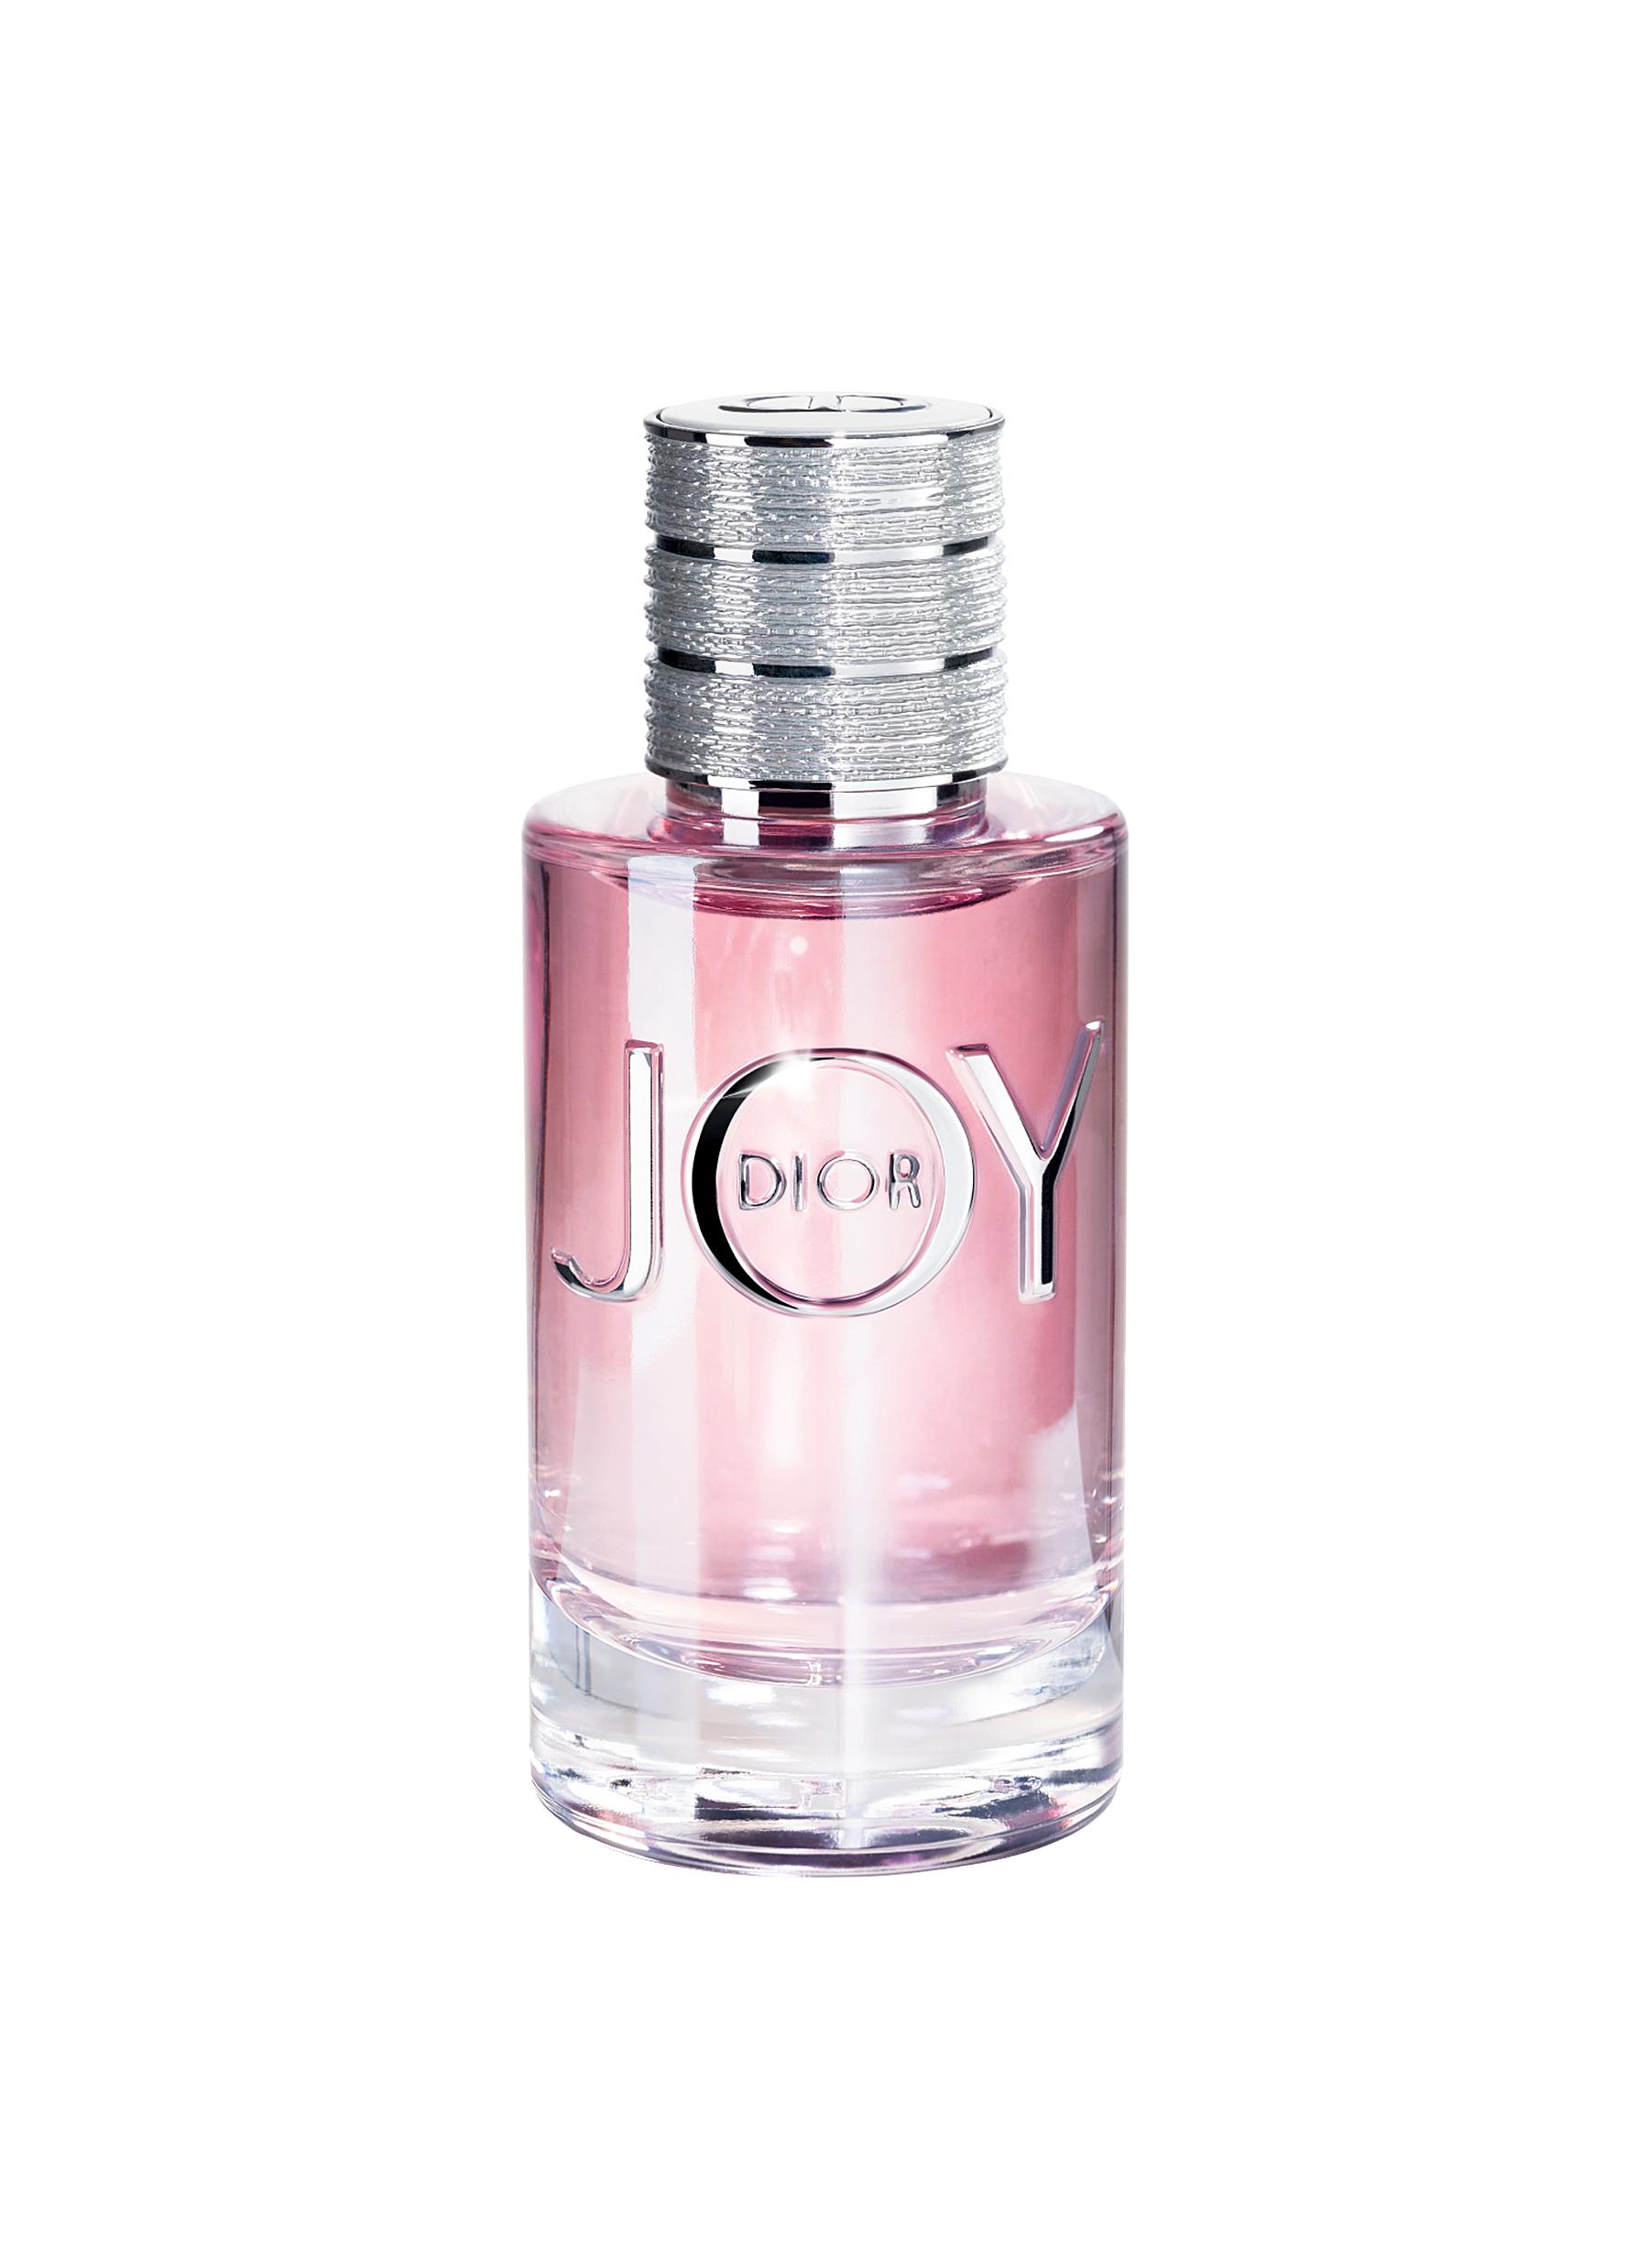 dior joy parfum 30ml